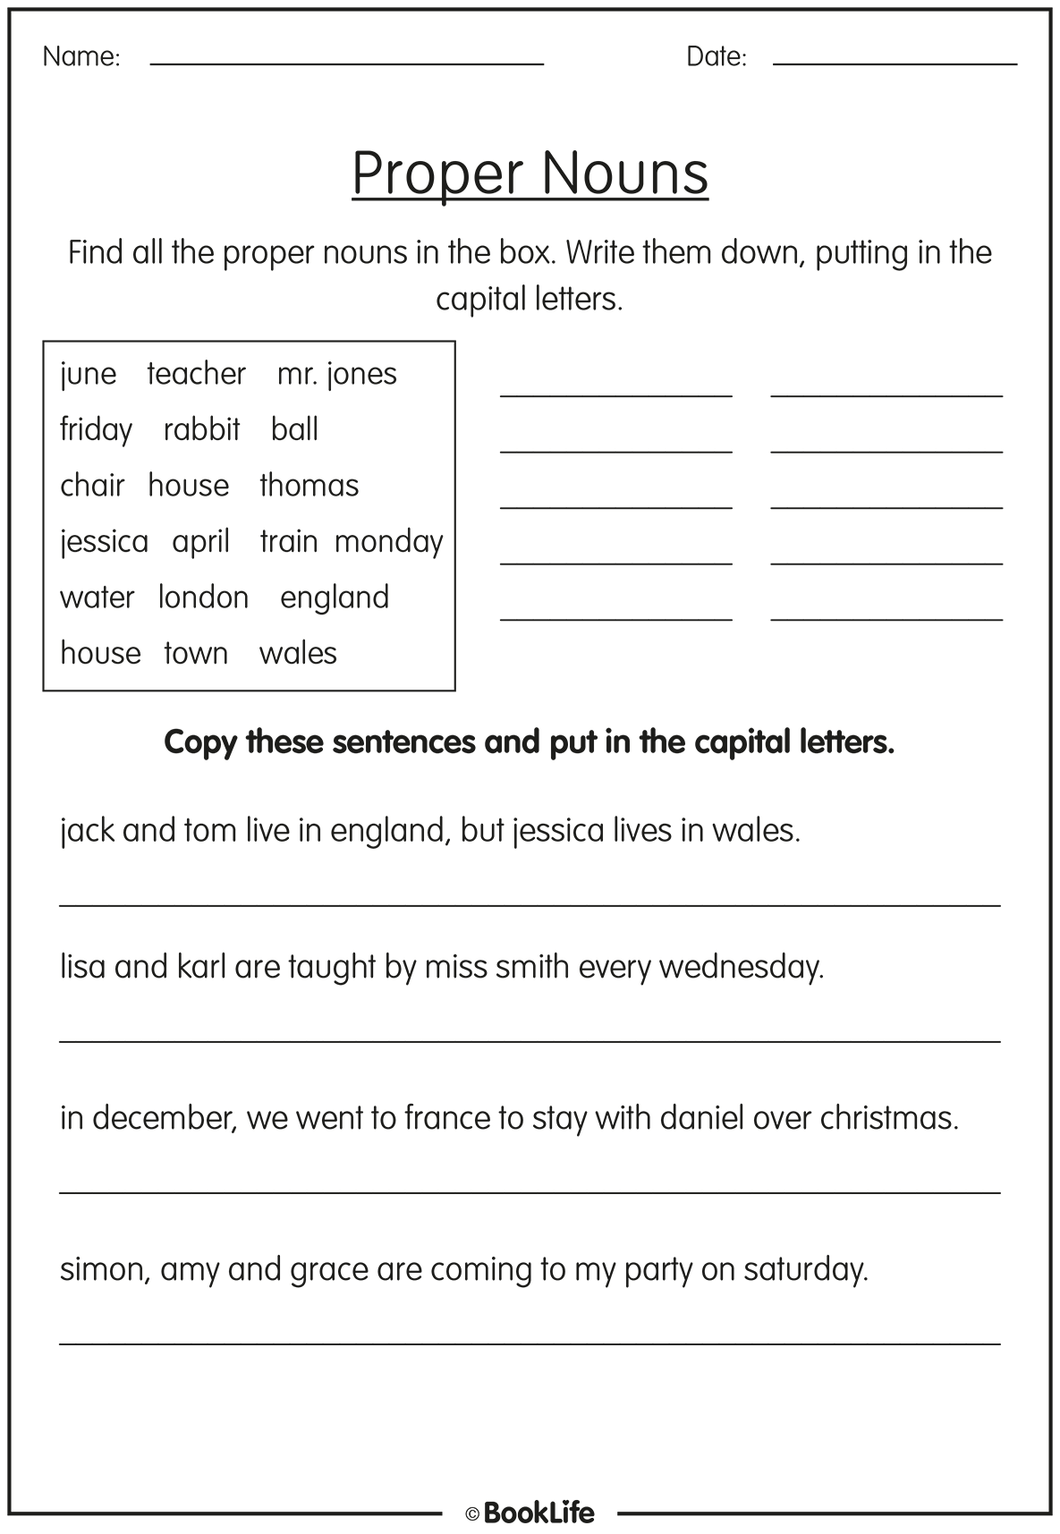 proper-nouns-activity-sheet-booklife